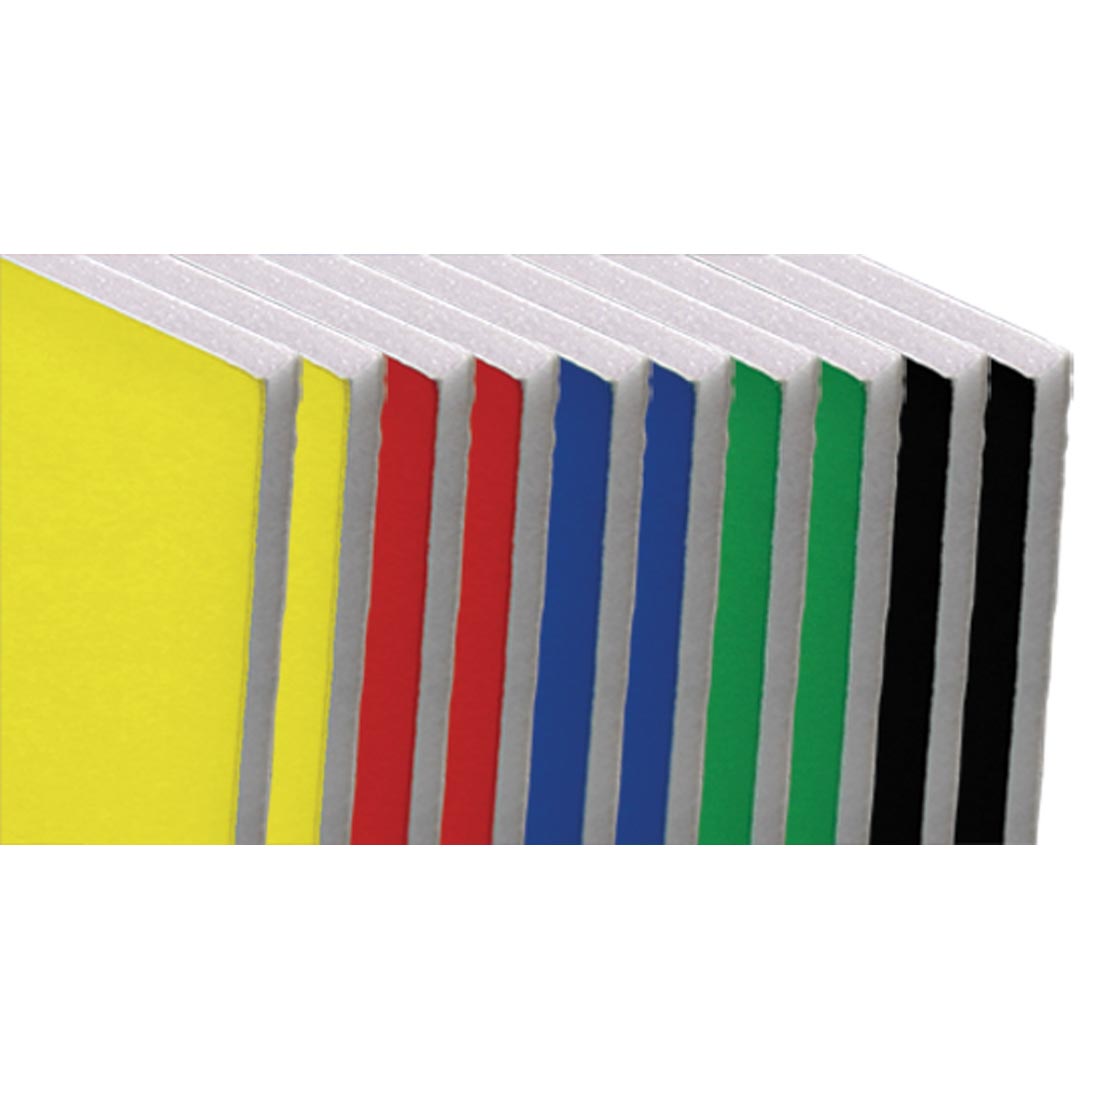 Corners showing of the Flipside Colored Foam Board Assortment